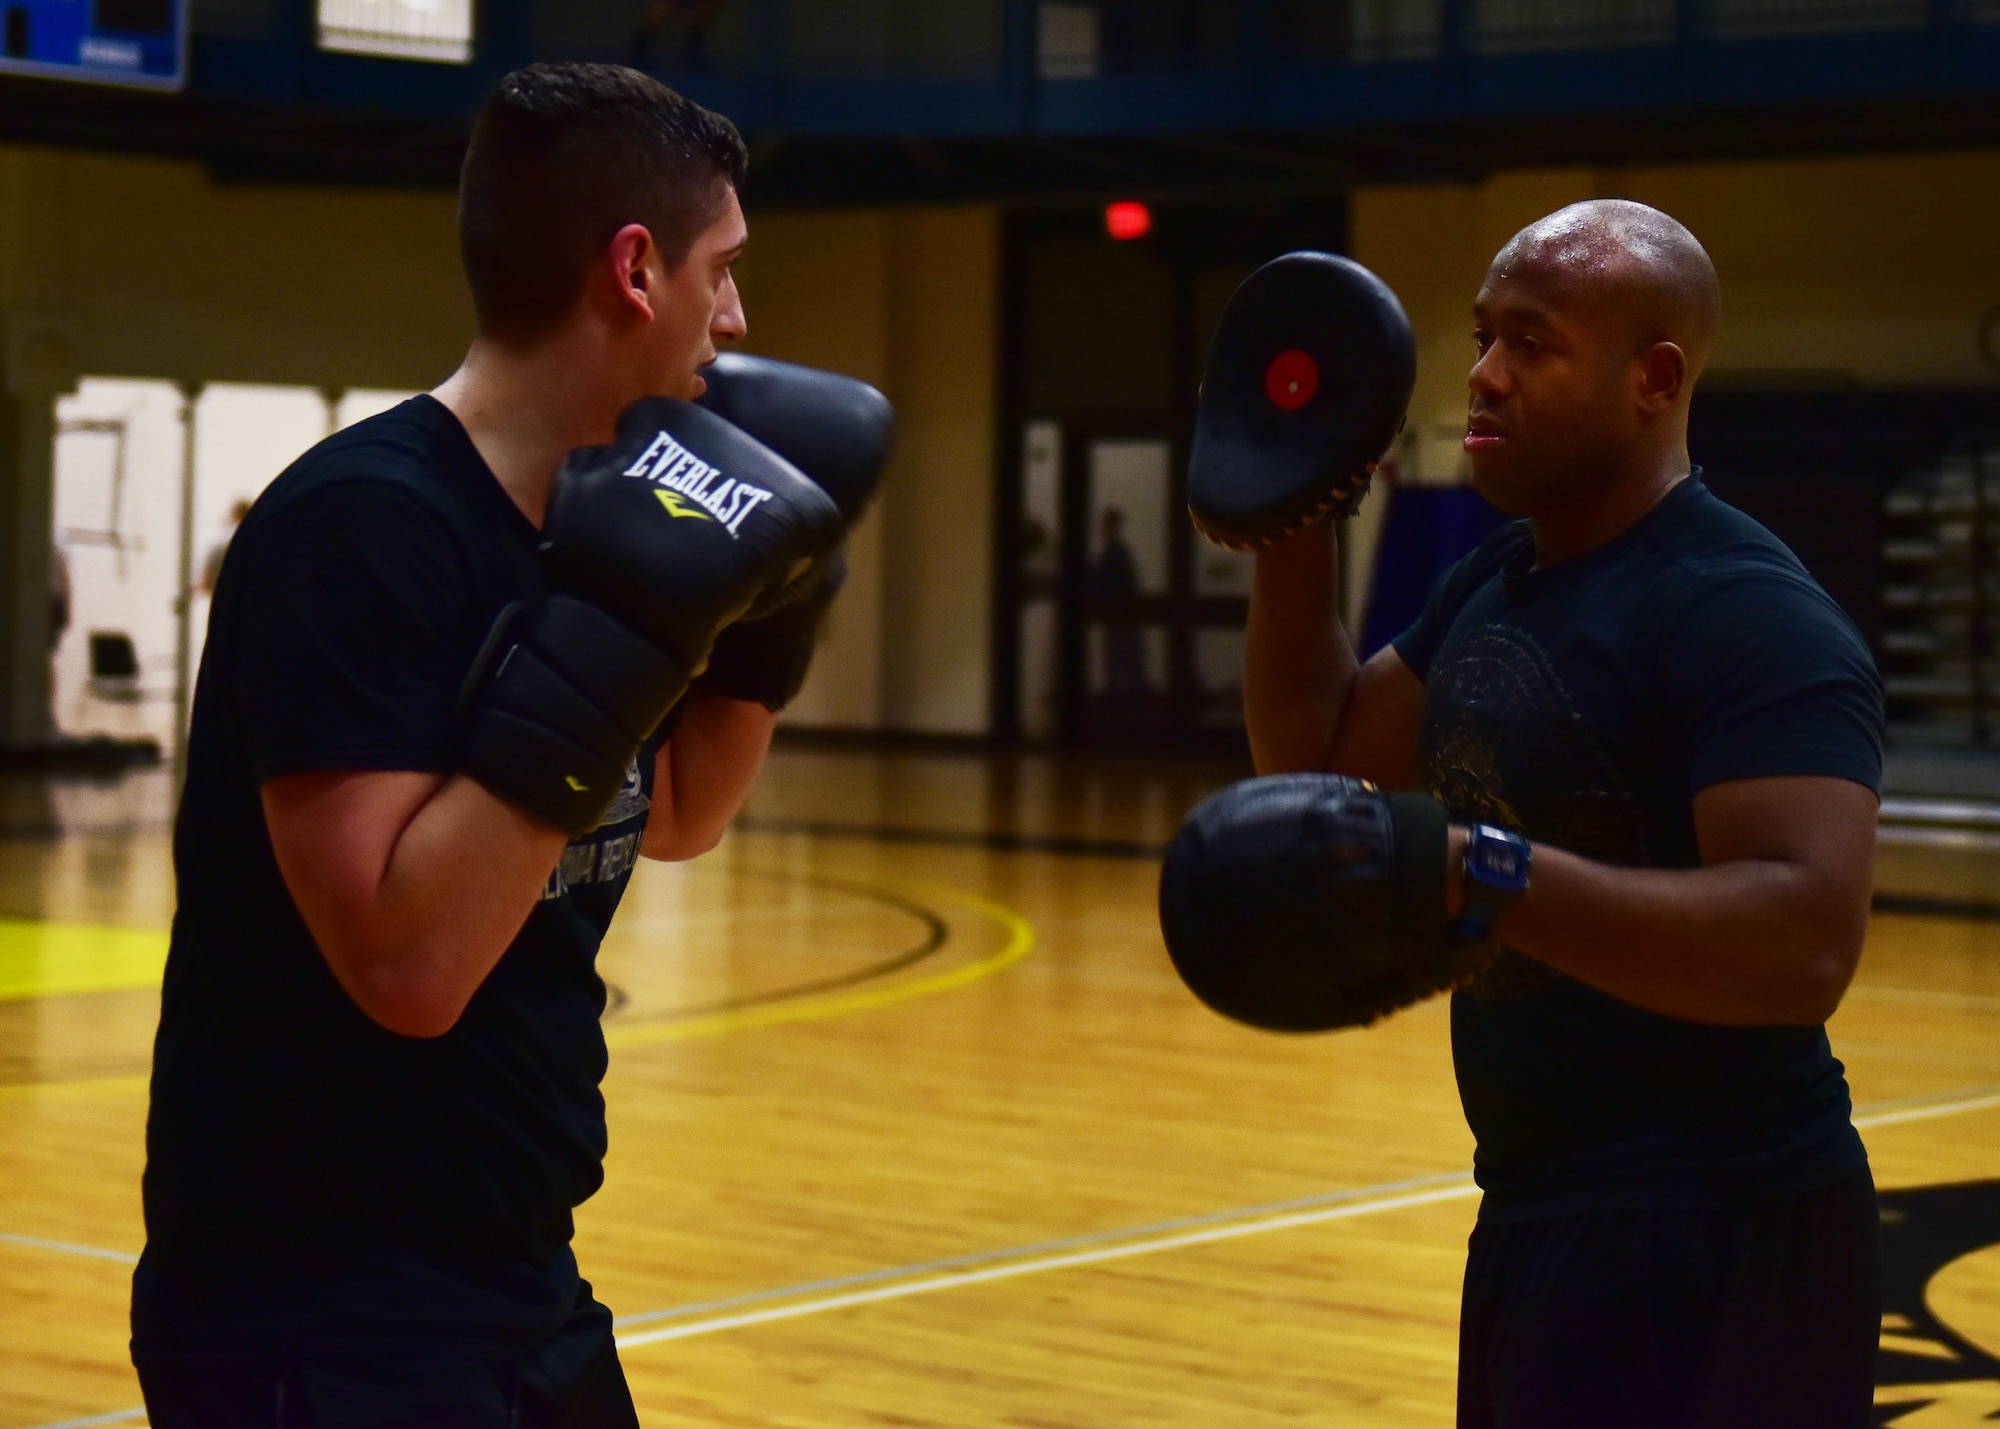 Two men wear boxing equipment practice boxing.